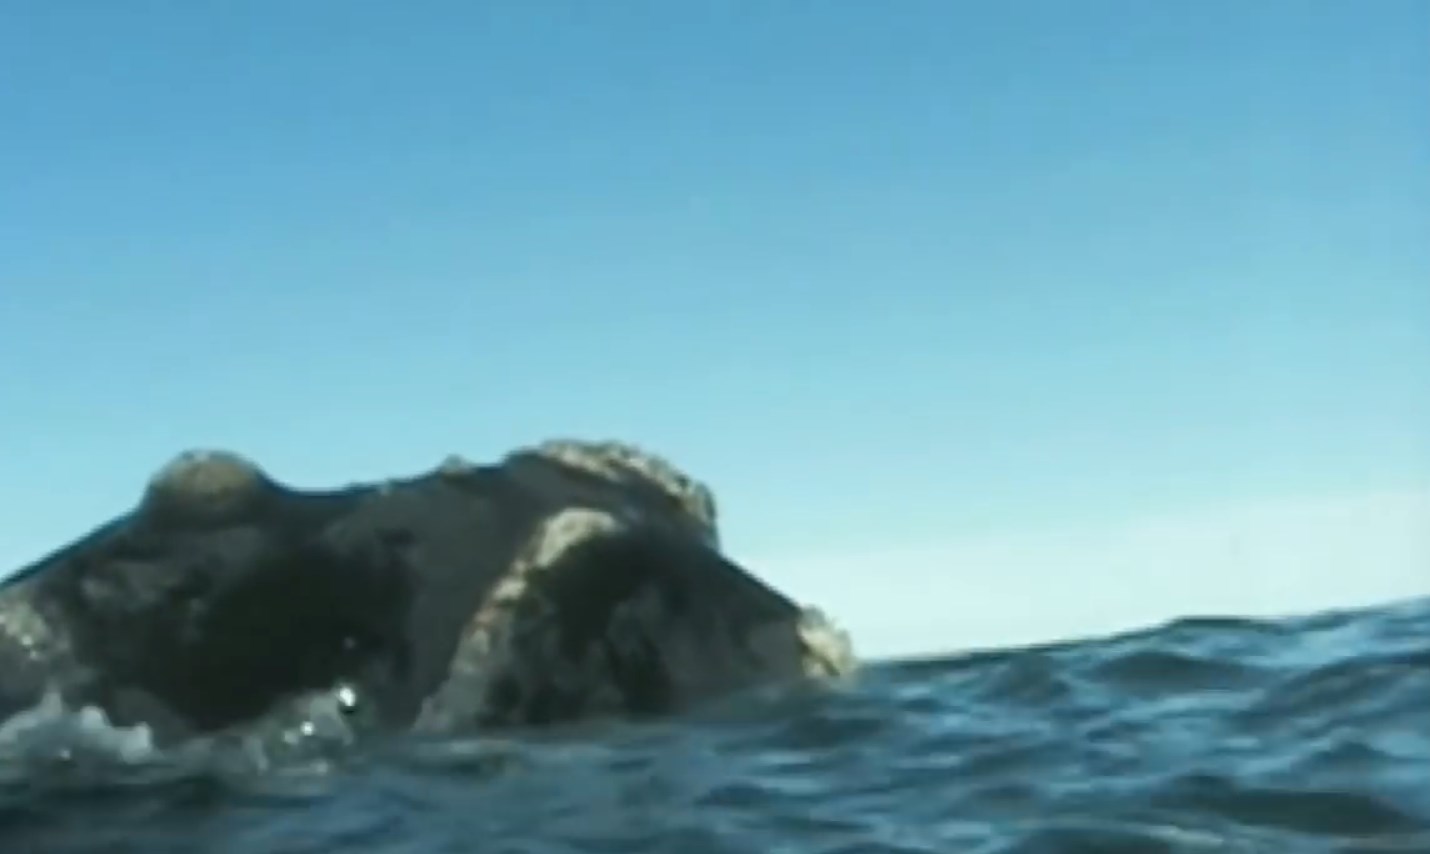 02.-Le balene in Patagonia-5.jpg